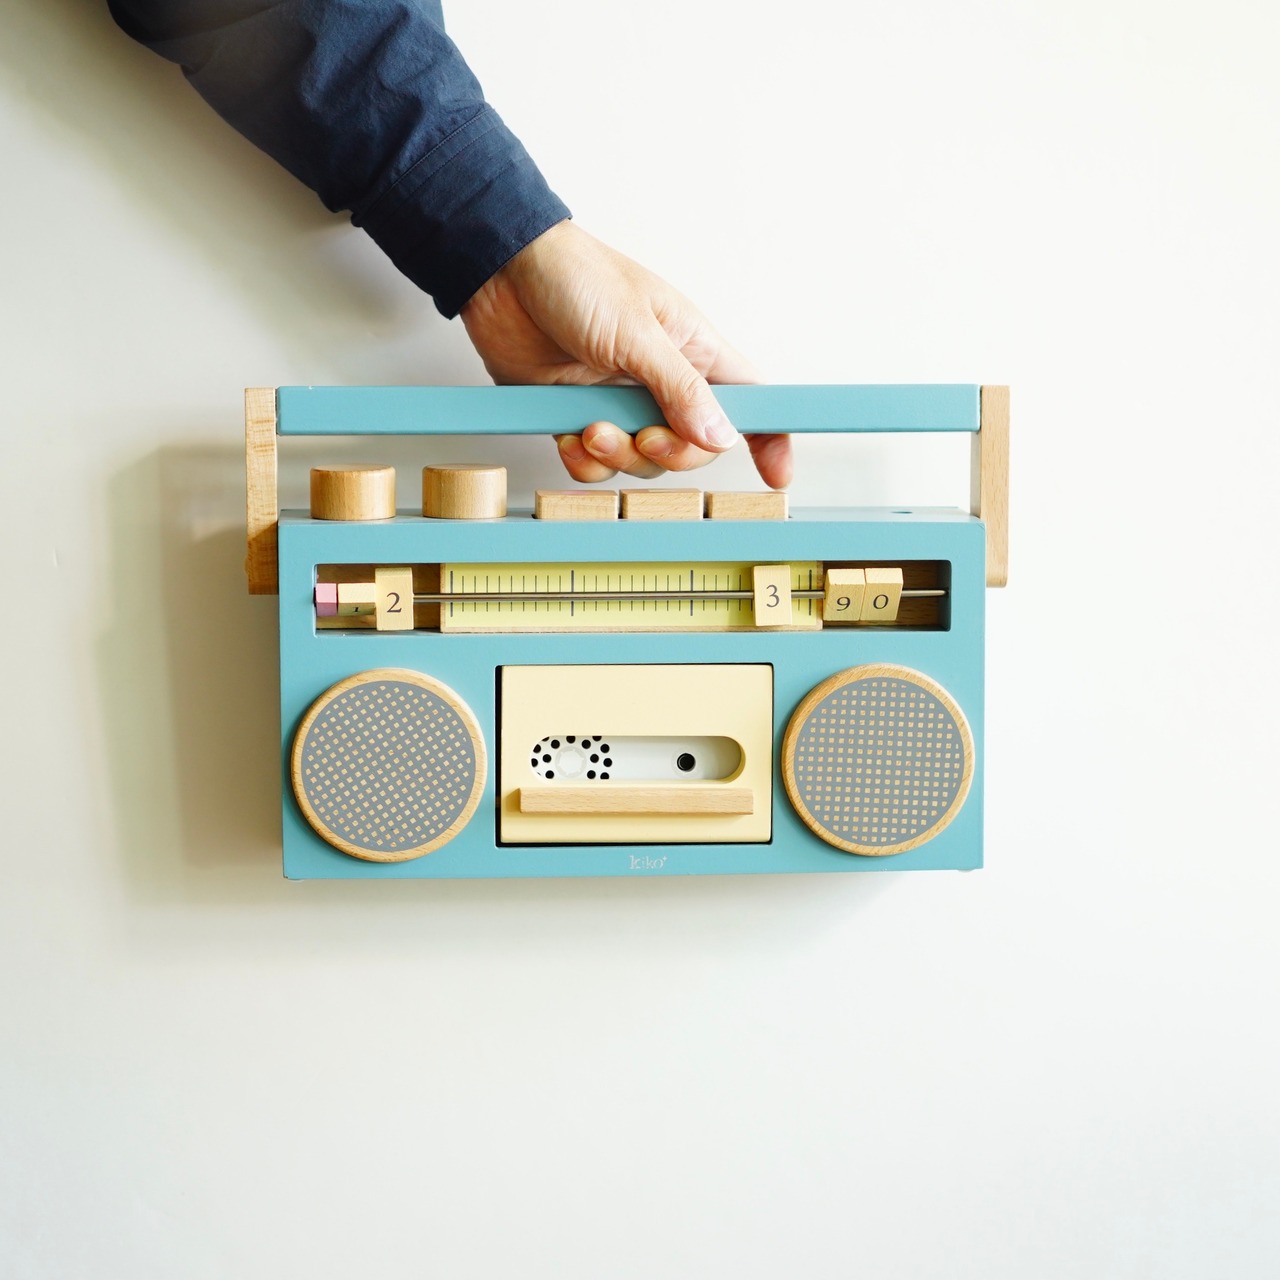 〈 kiko+ 〉 tape recorder "録音できる木製ラジカセ" / blue